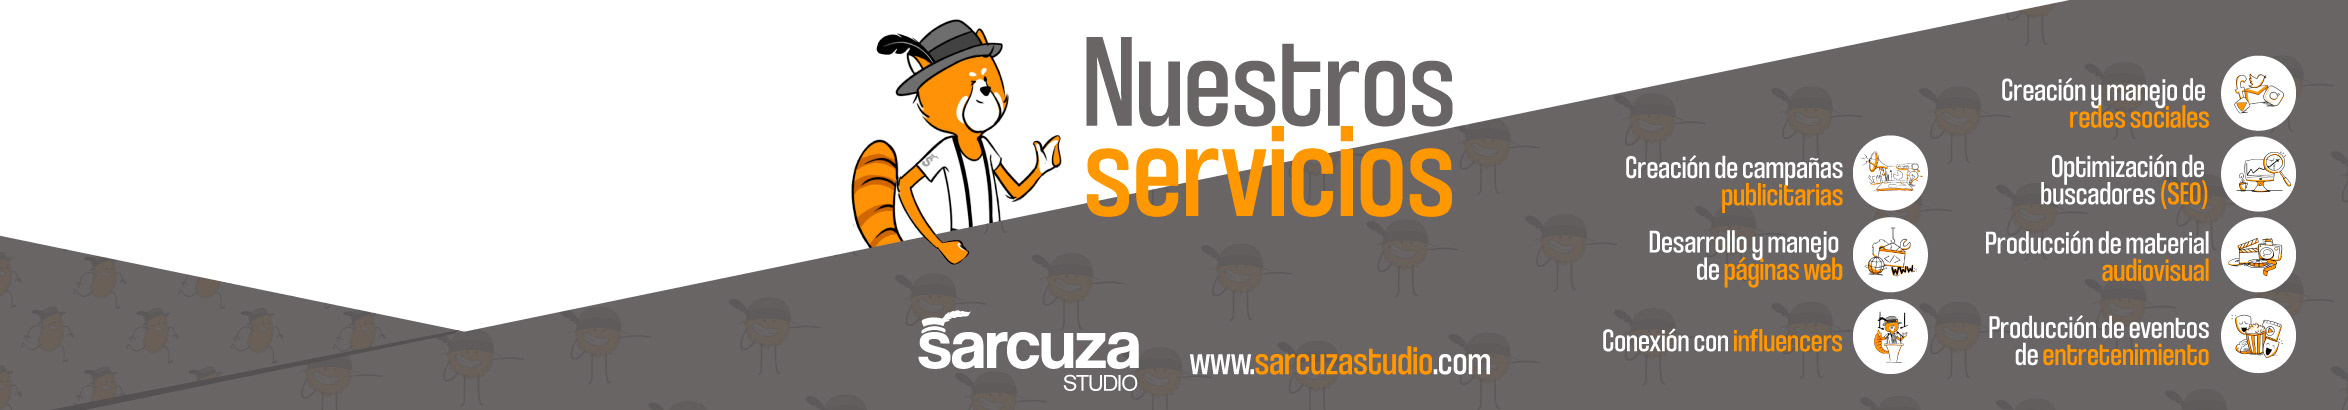 Profielbanner van Sarcuza Studio